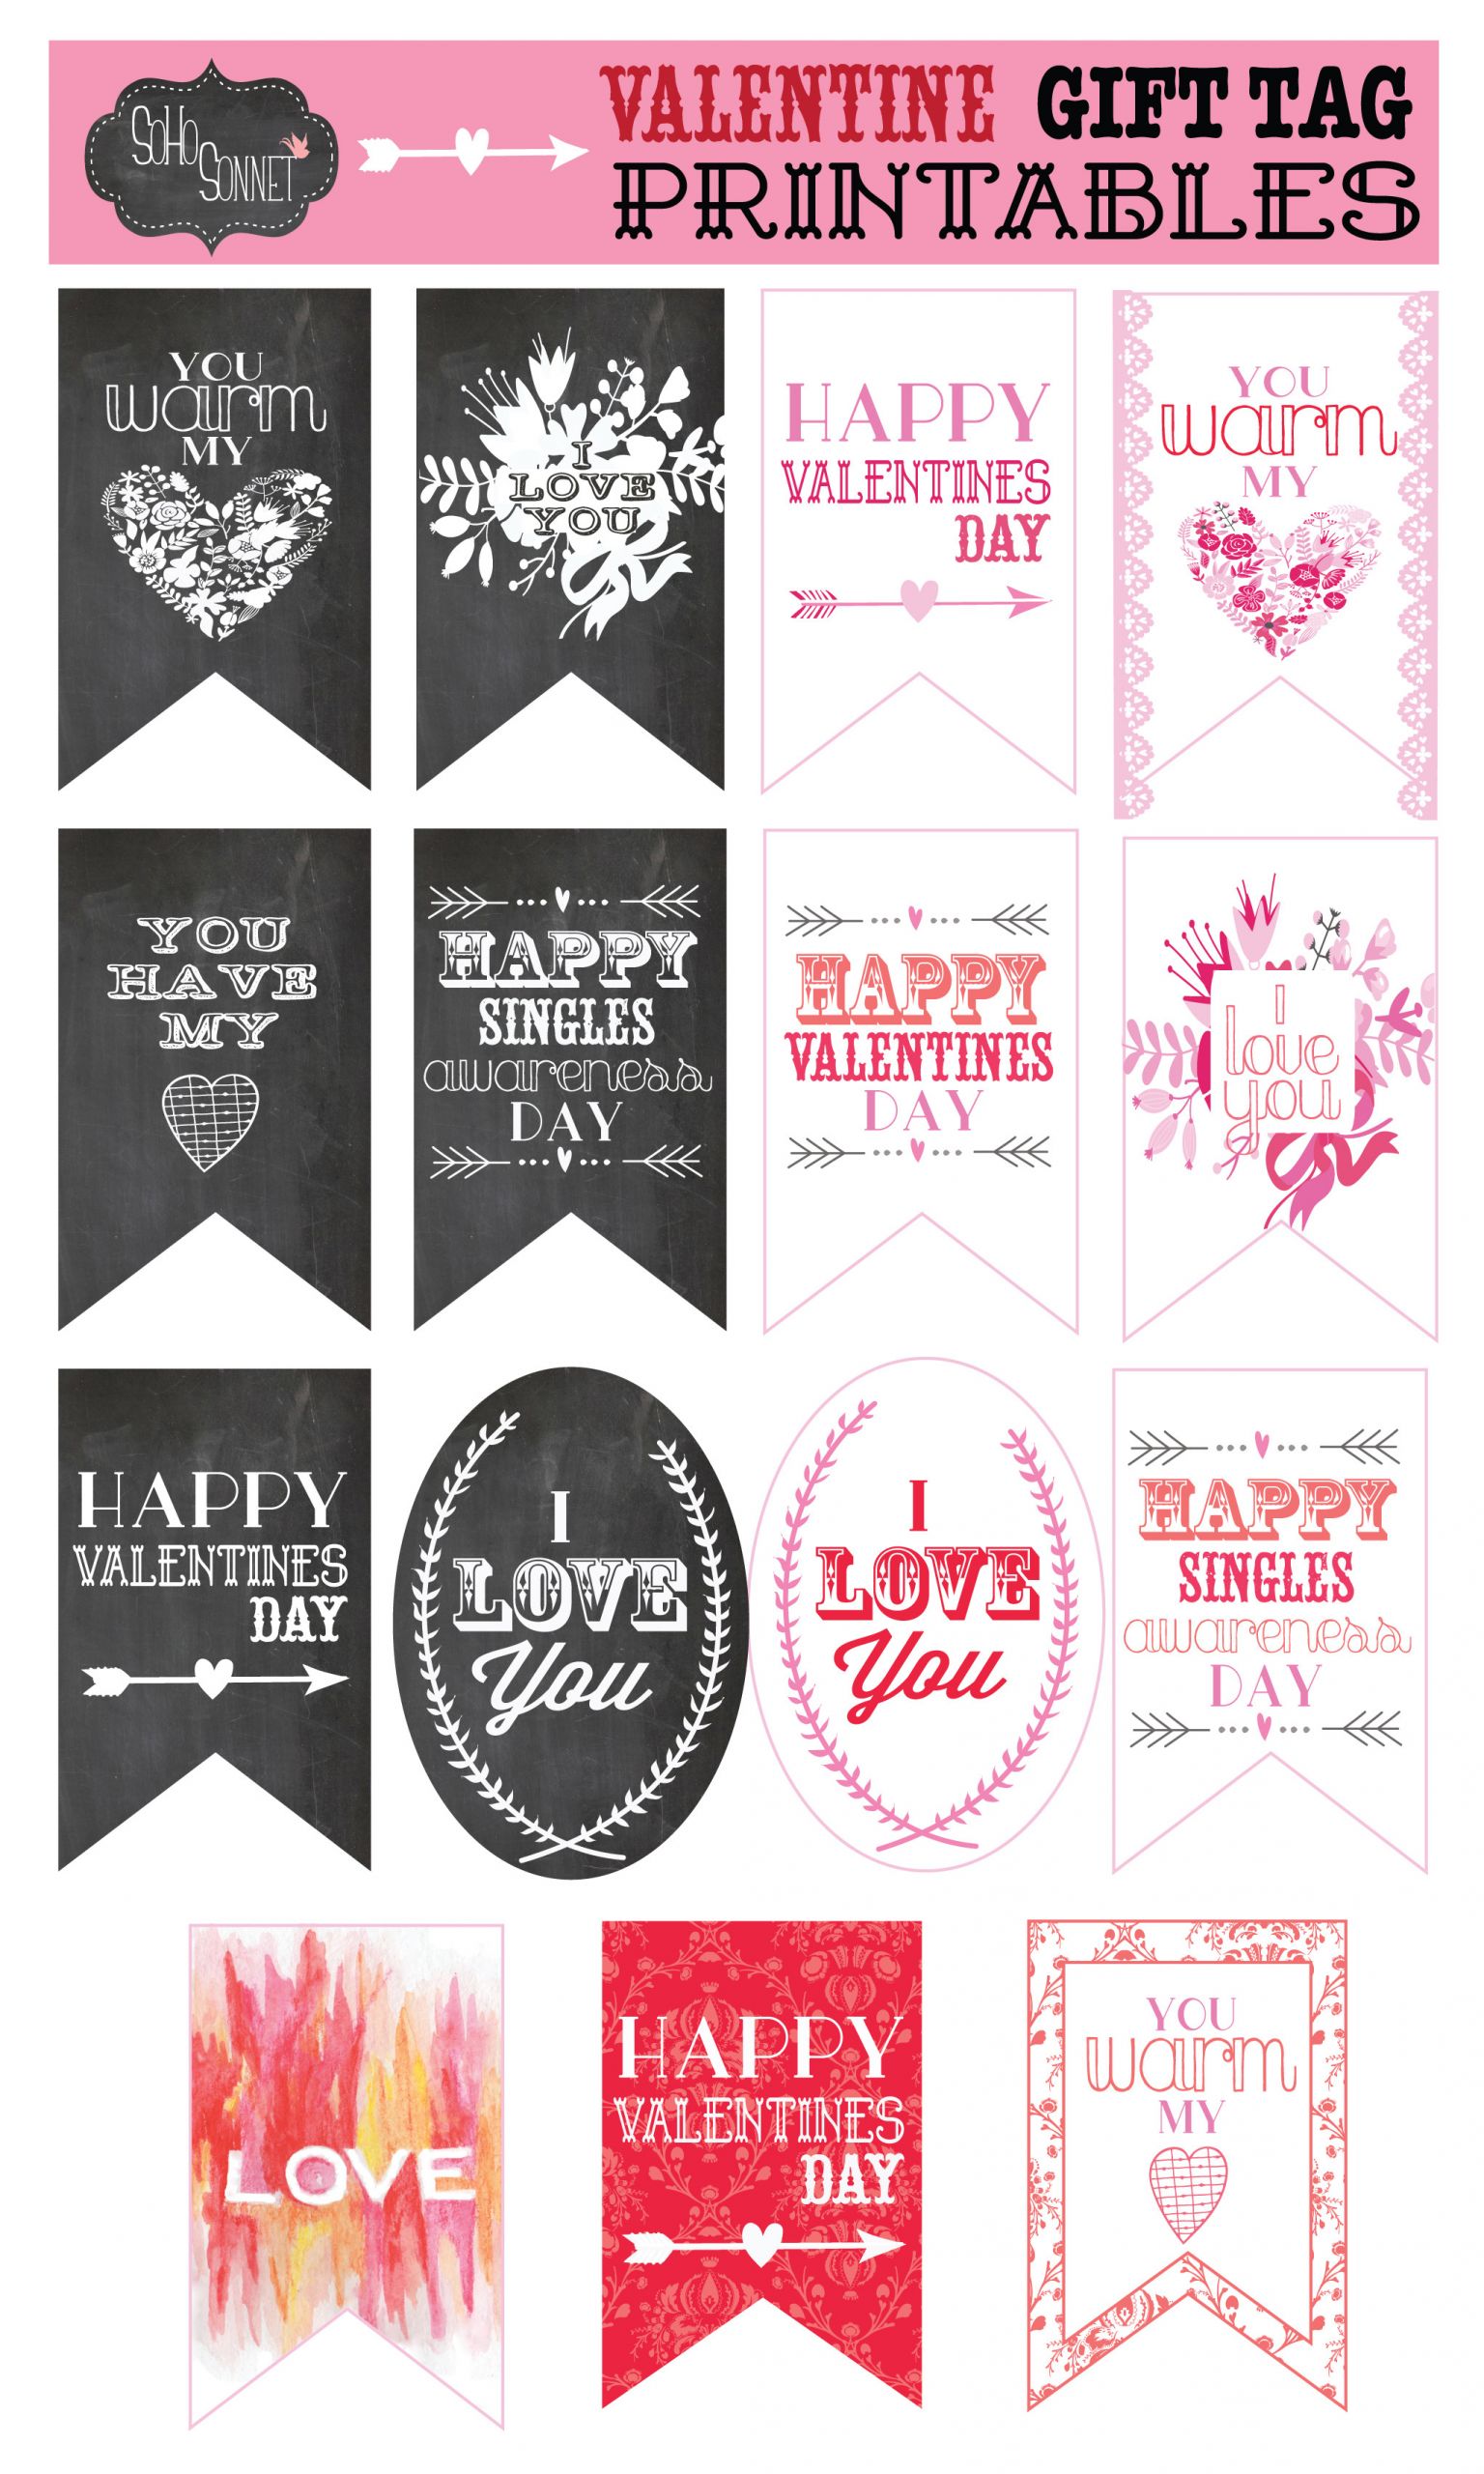 Valentine Gift Tag Ideas
 Free Valentine Gift Tag Printables SohoSonnet Creative